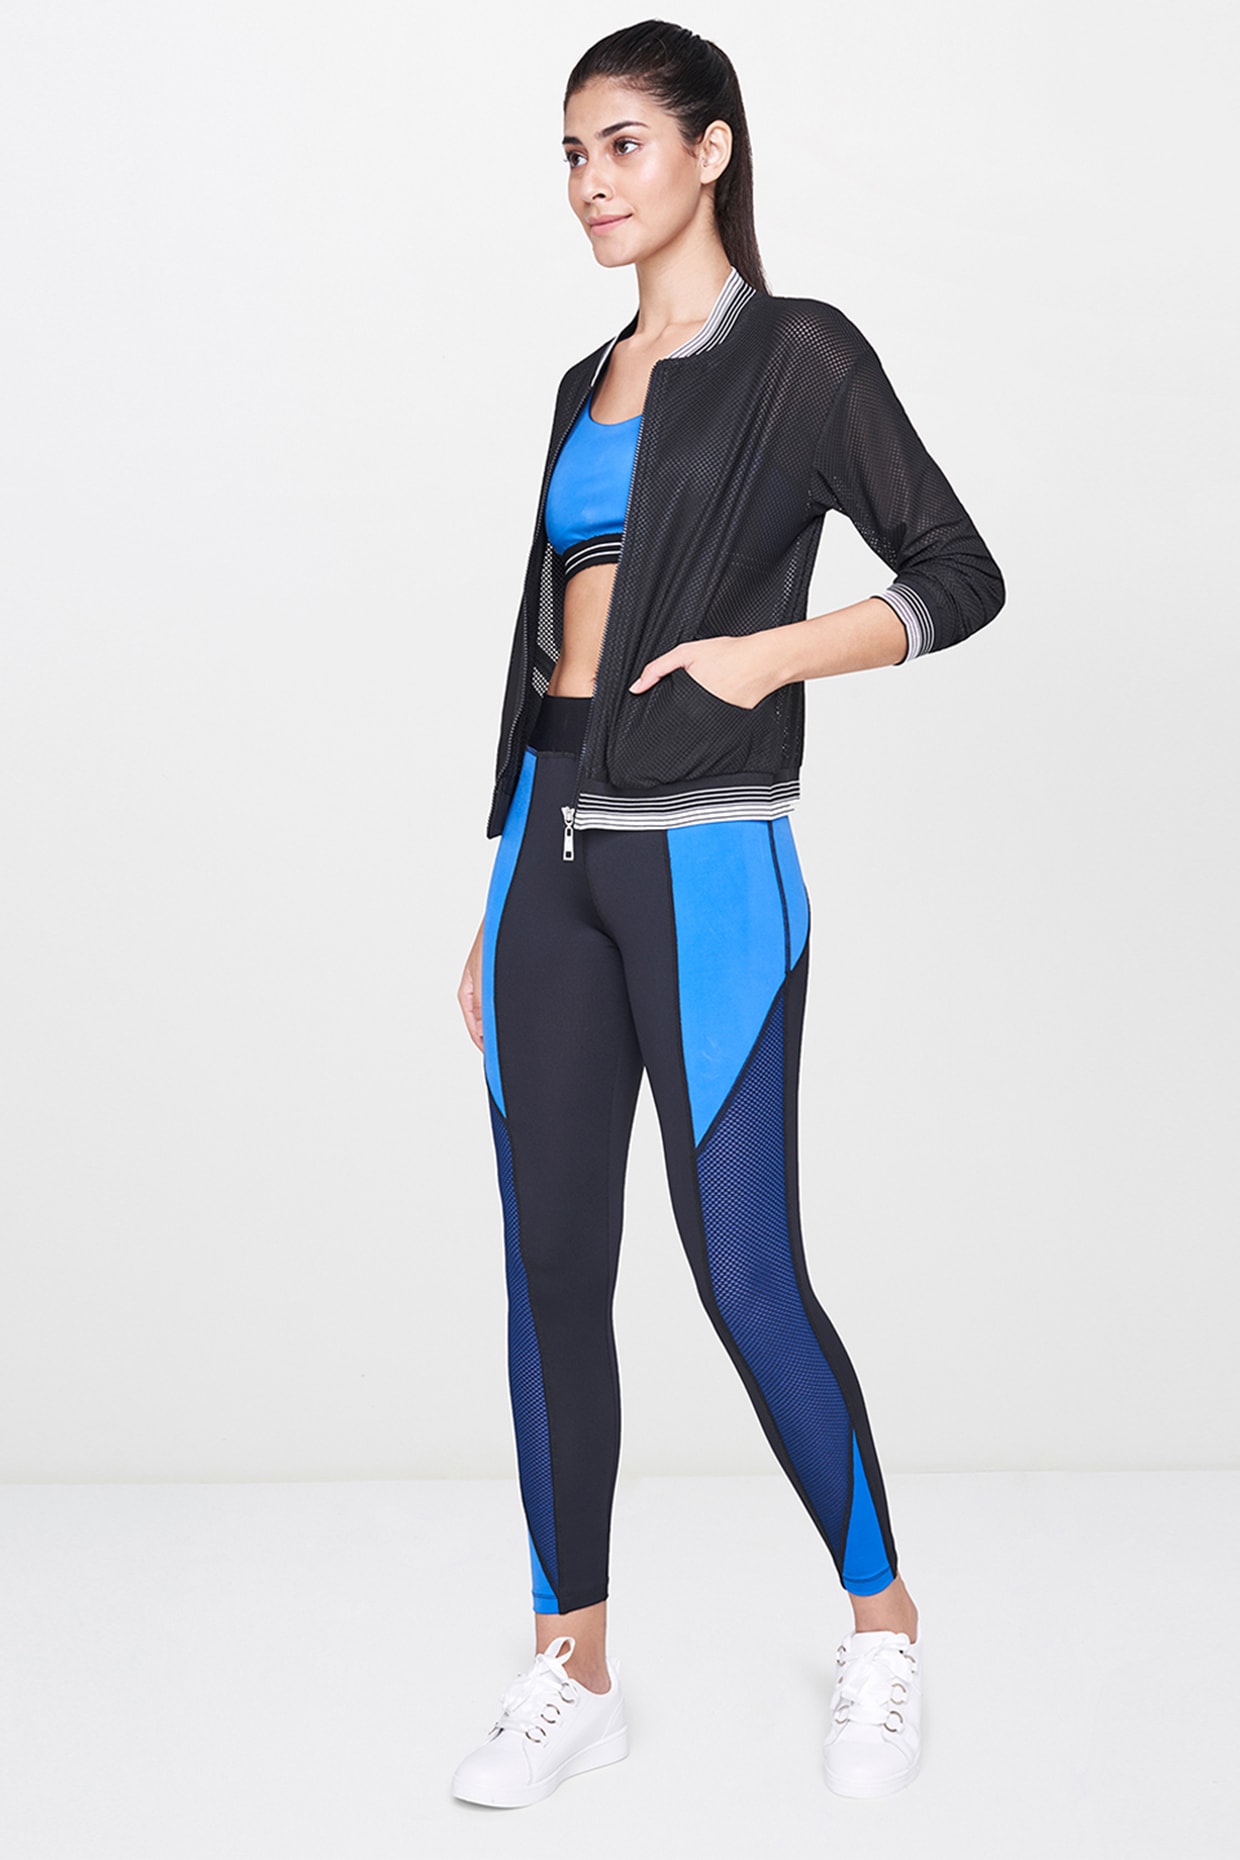 Women's Varsity Fleece Jogger from Nike – The Bowdoin Store